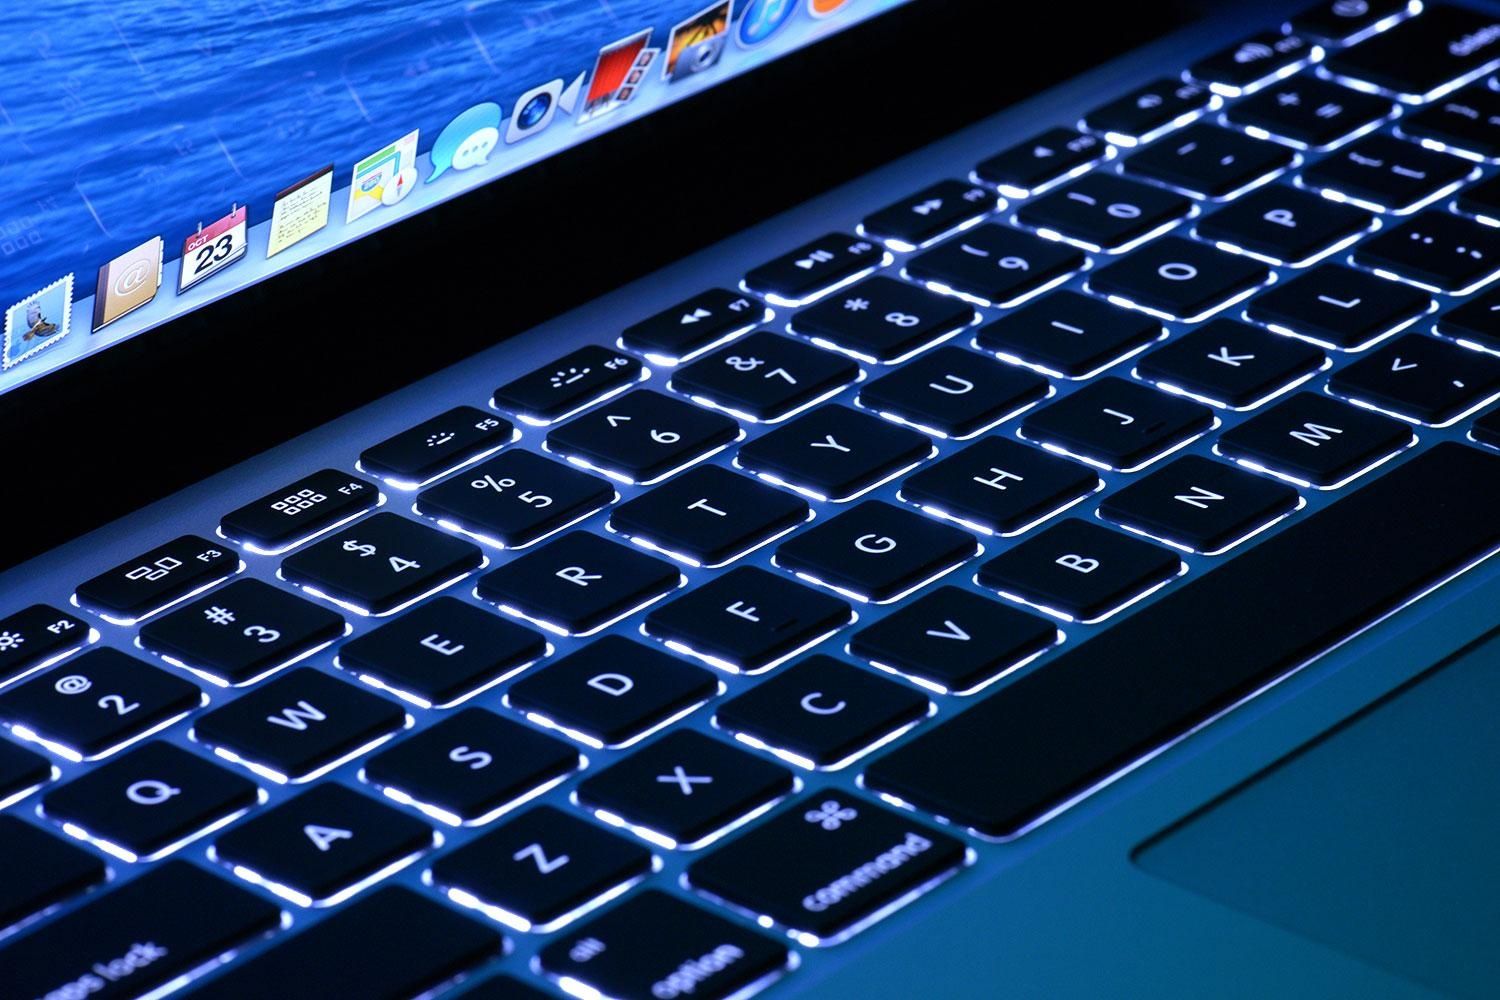 macbook-pro-13-2013-keyboard-macro-1500x1000.jpg